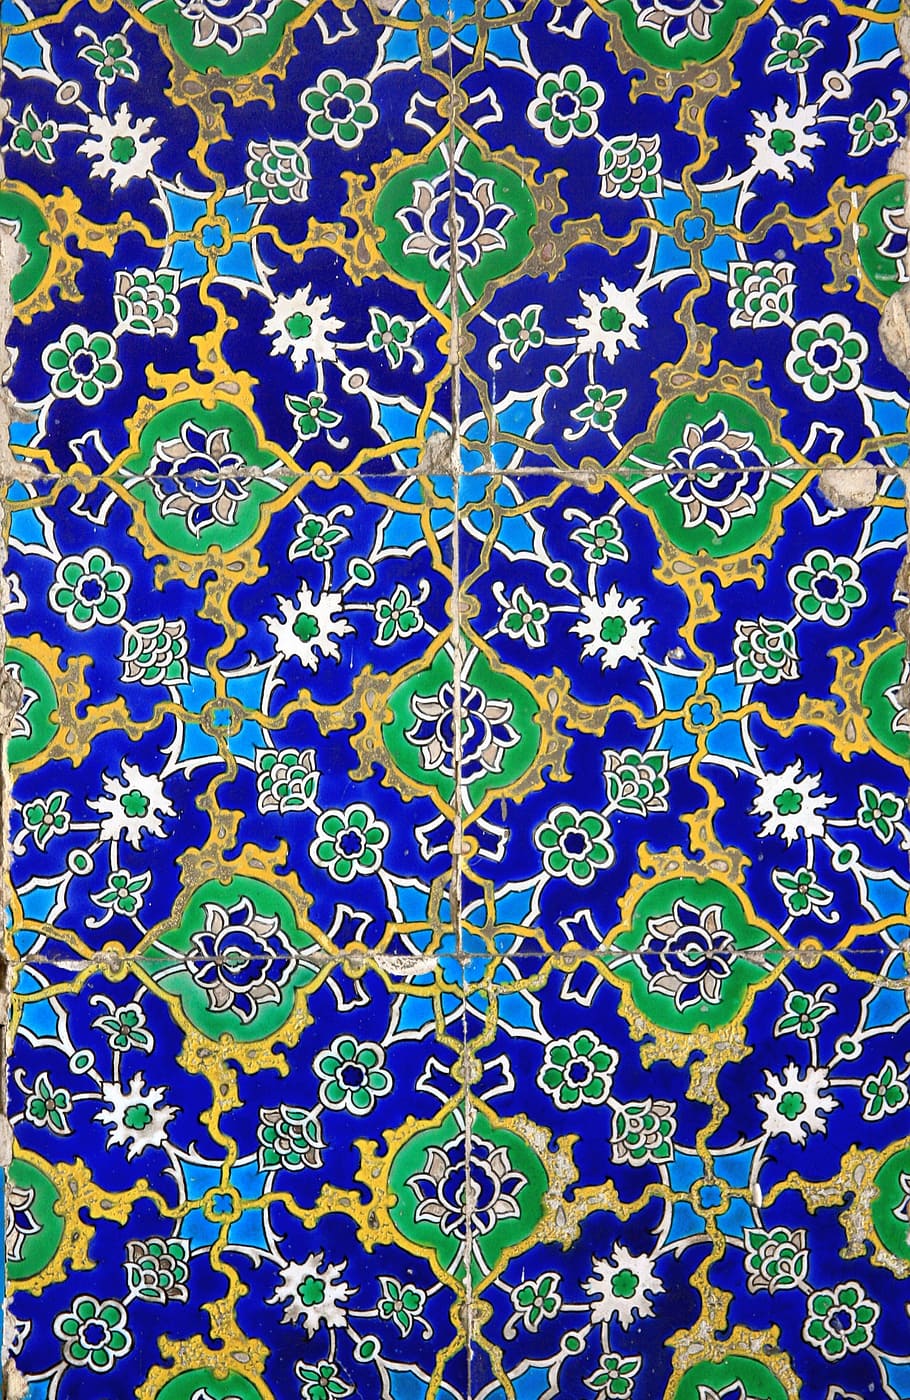 Arabesque in Green Wallpaper